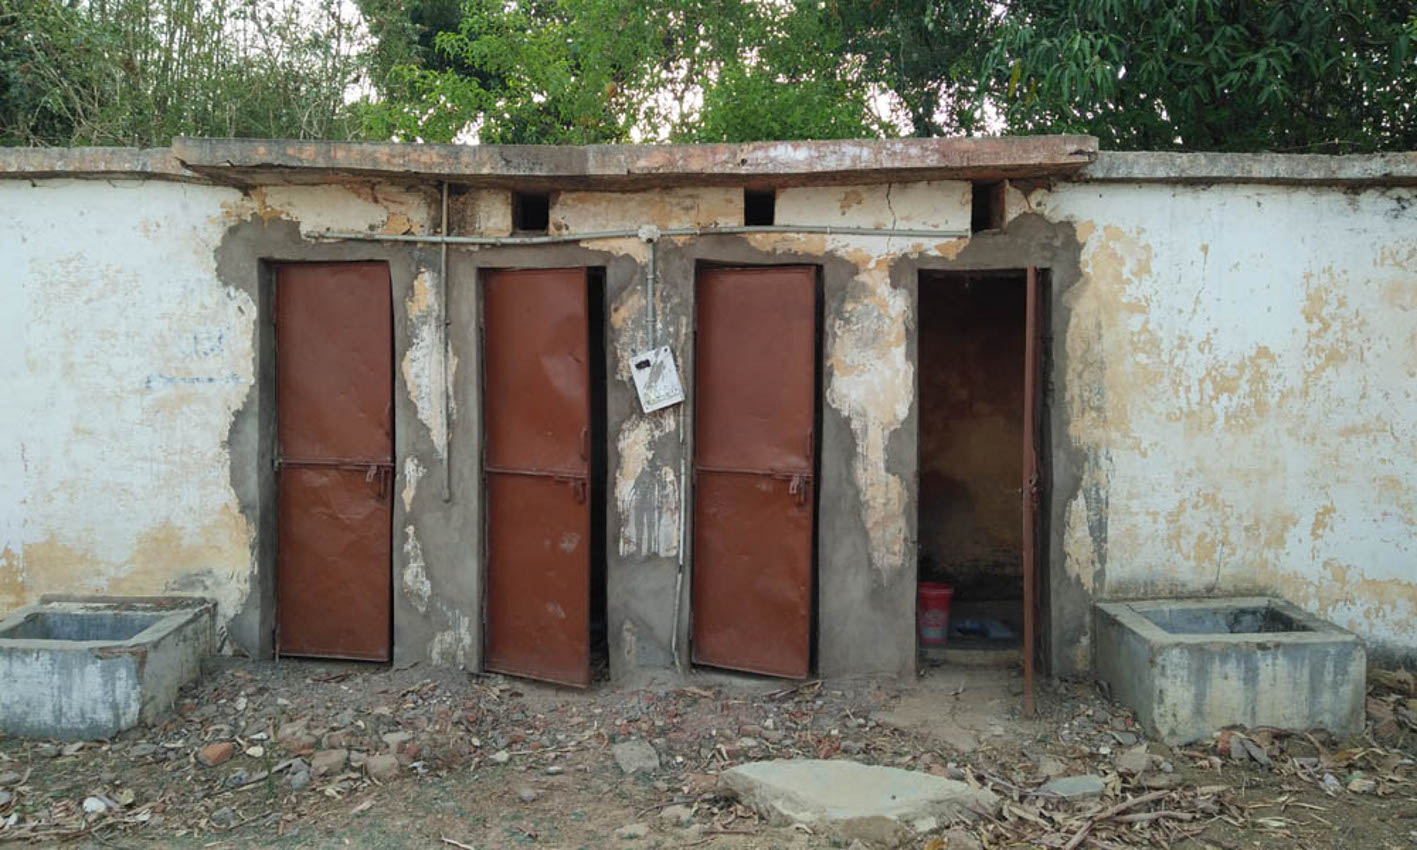 Maintenance of schools is toilets